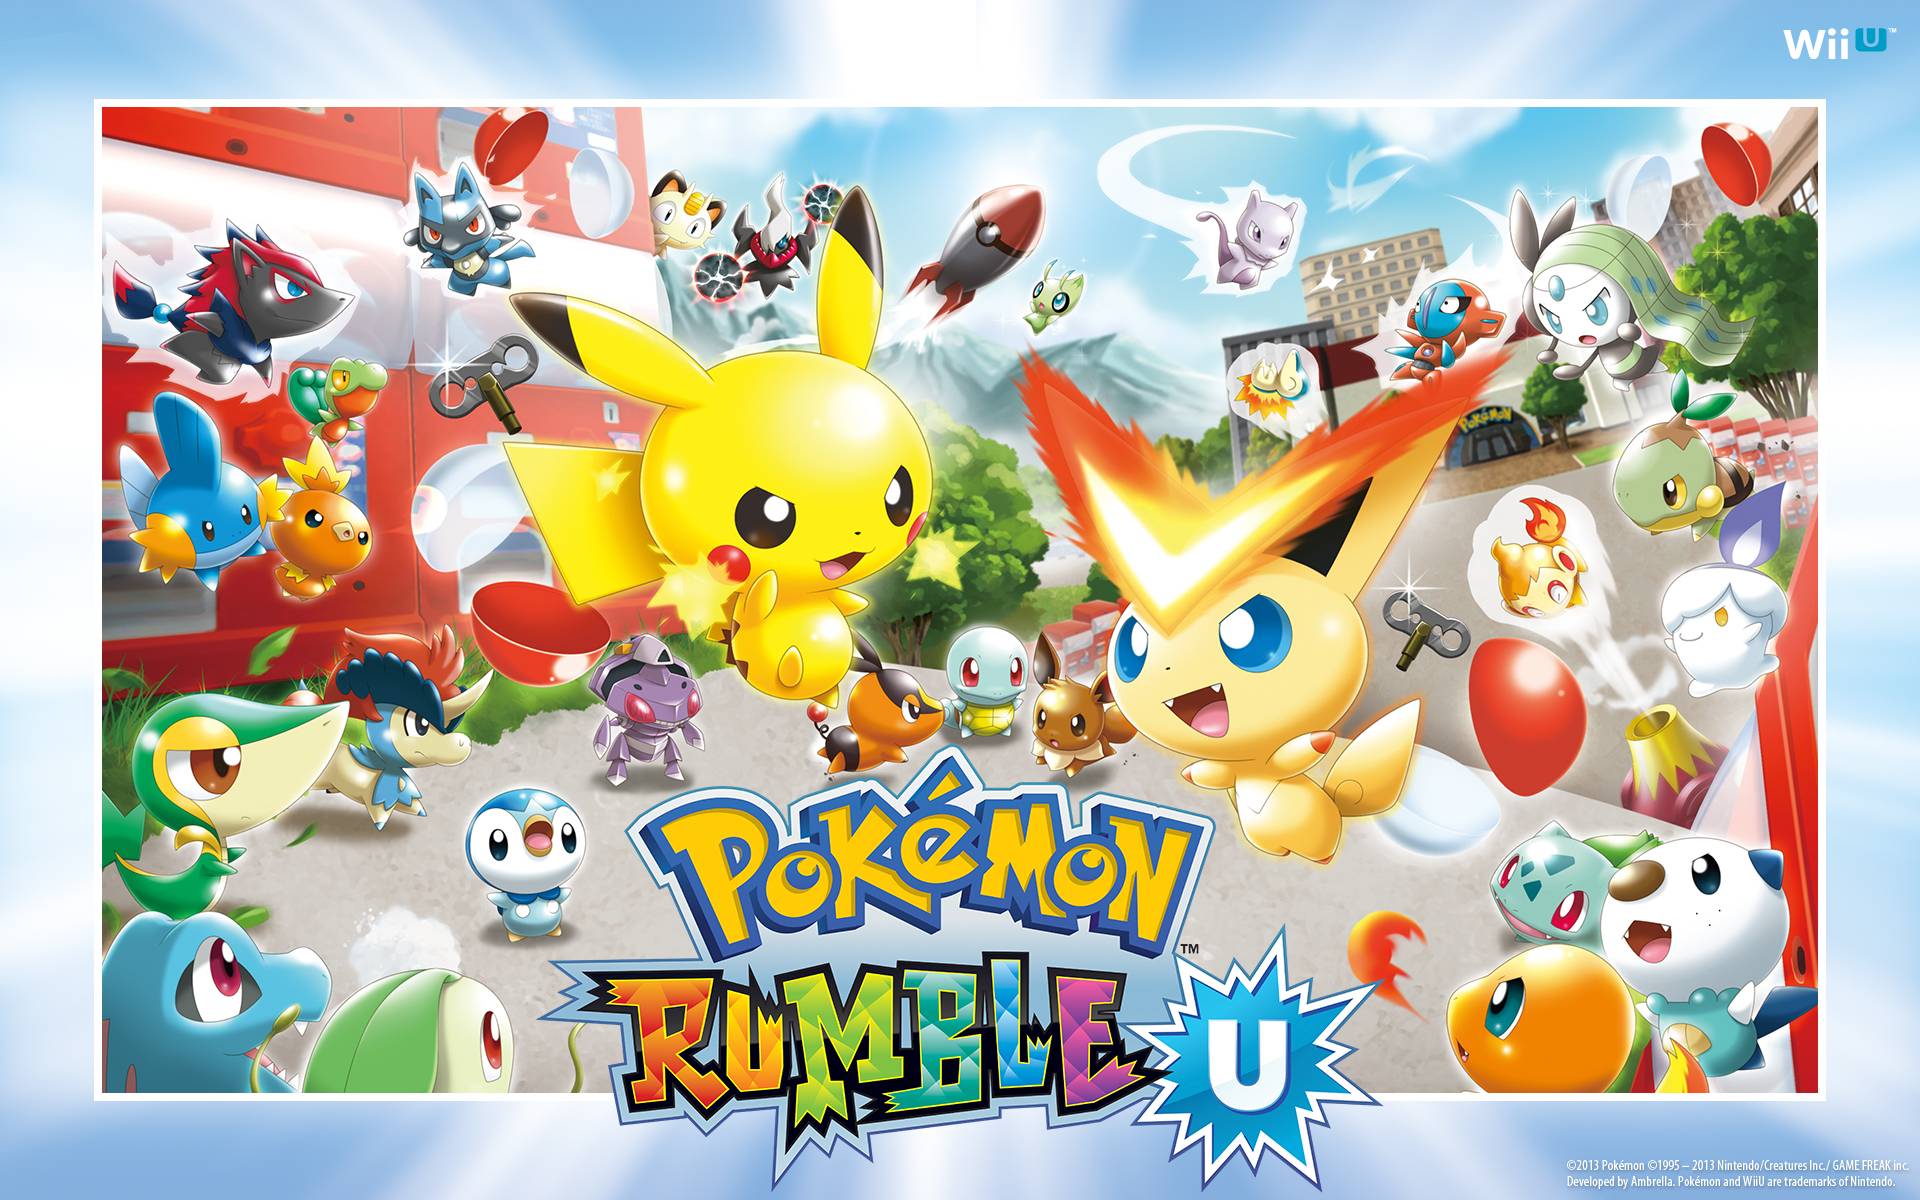 The Official Pokémon Website. Pokemon